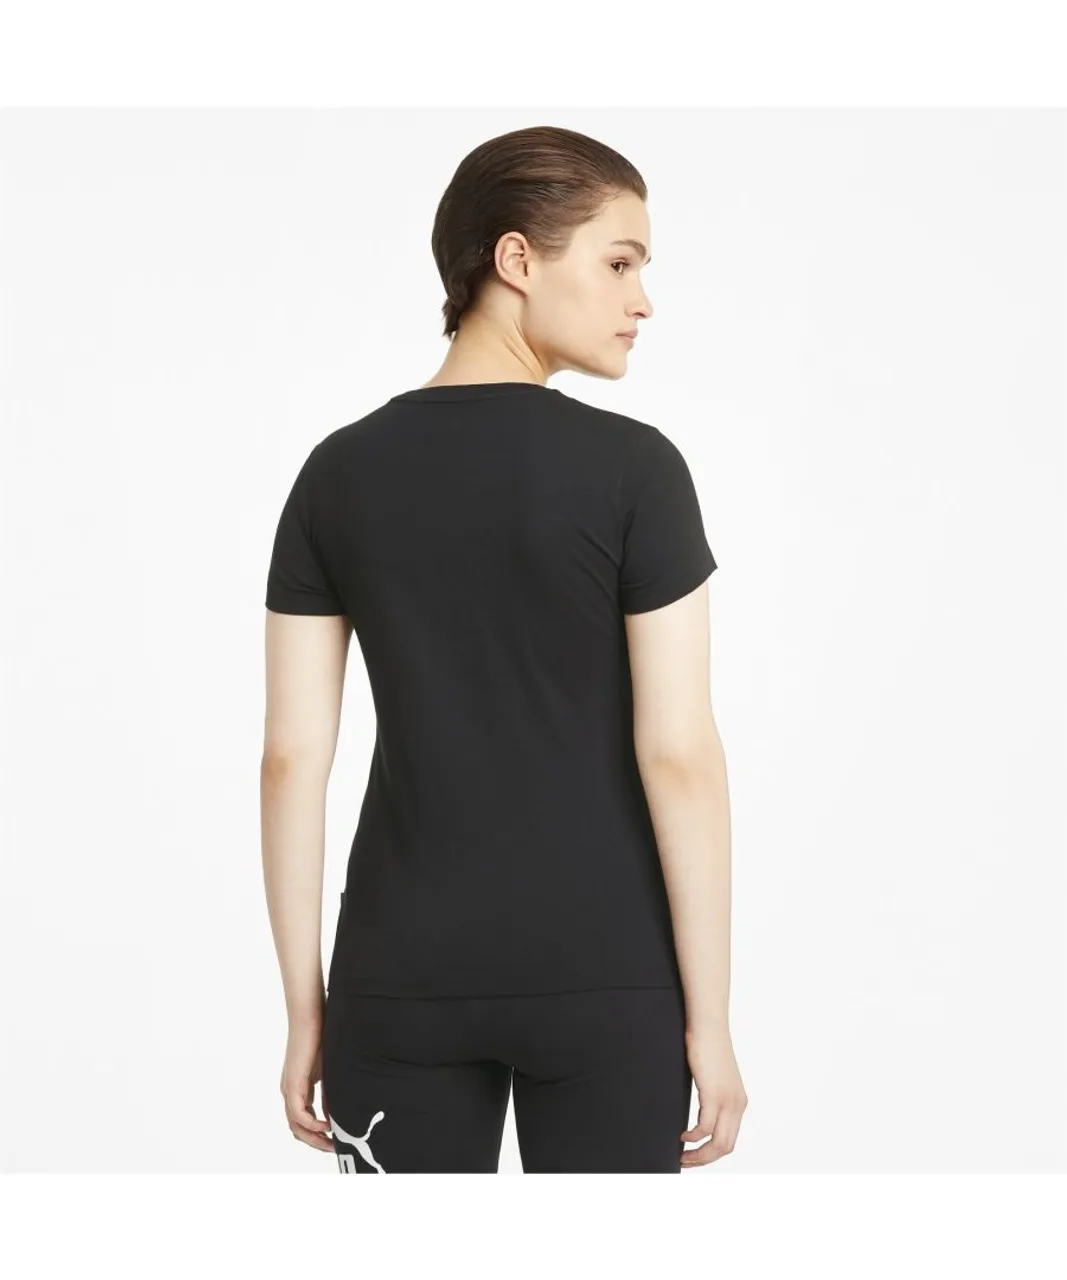 Puma WoMens Essentials Logo Tee T-Shirt - Black Cotton